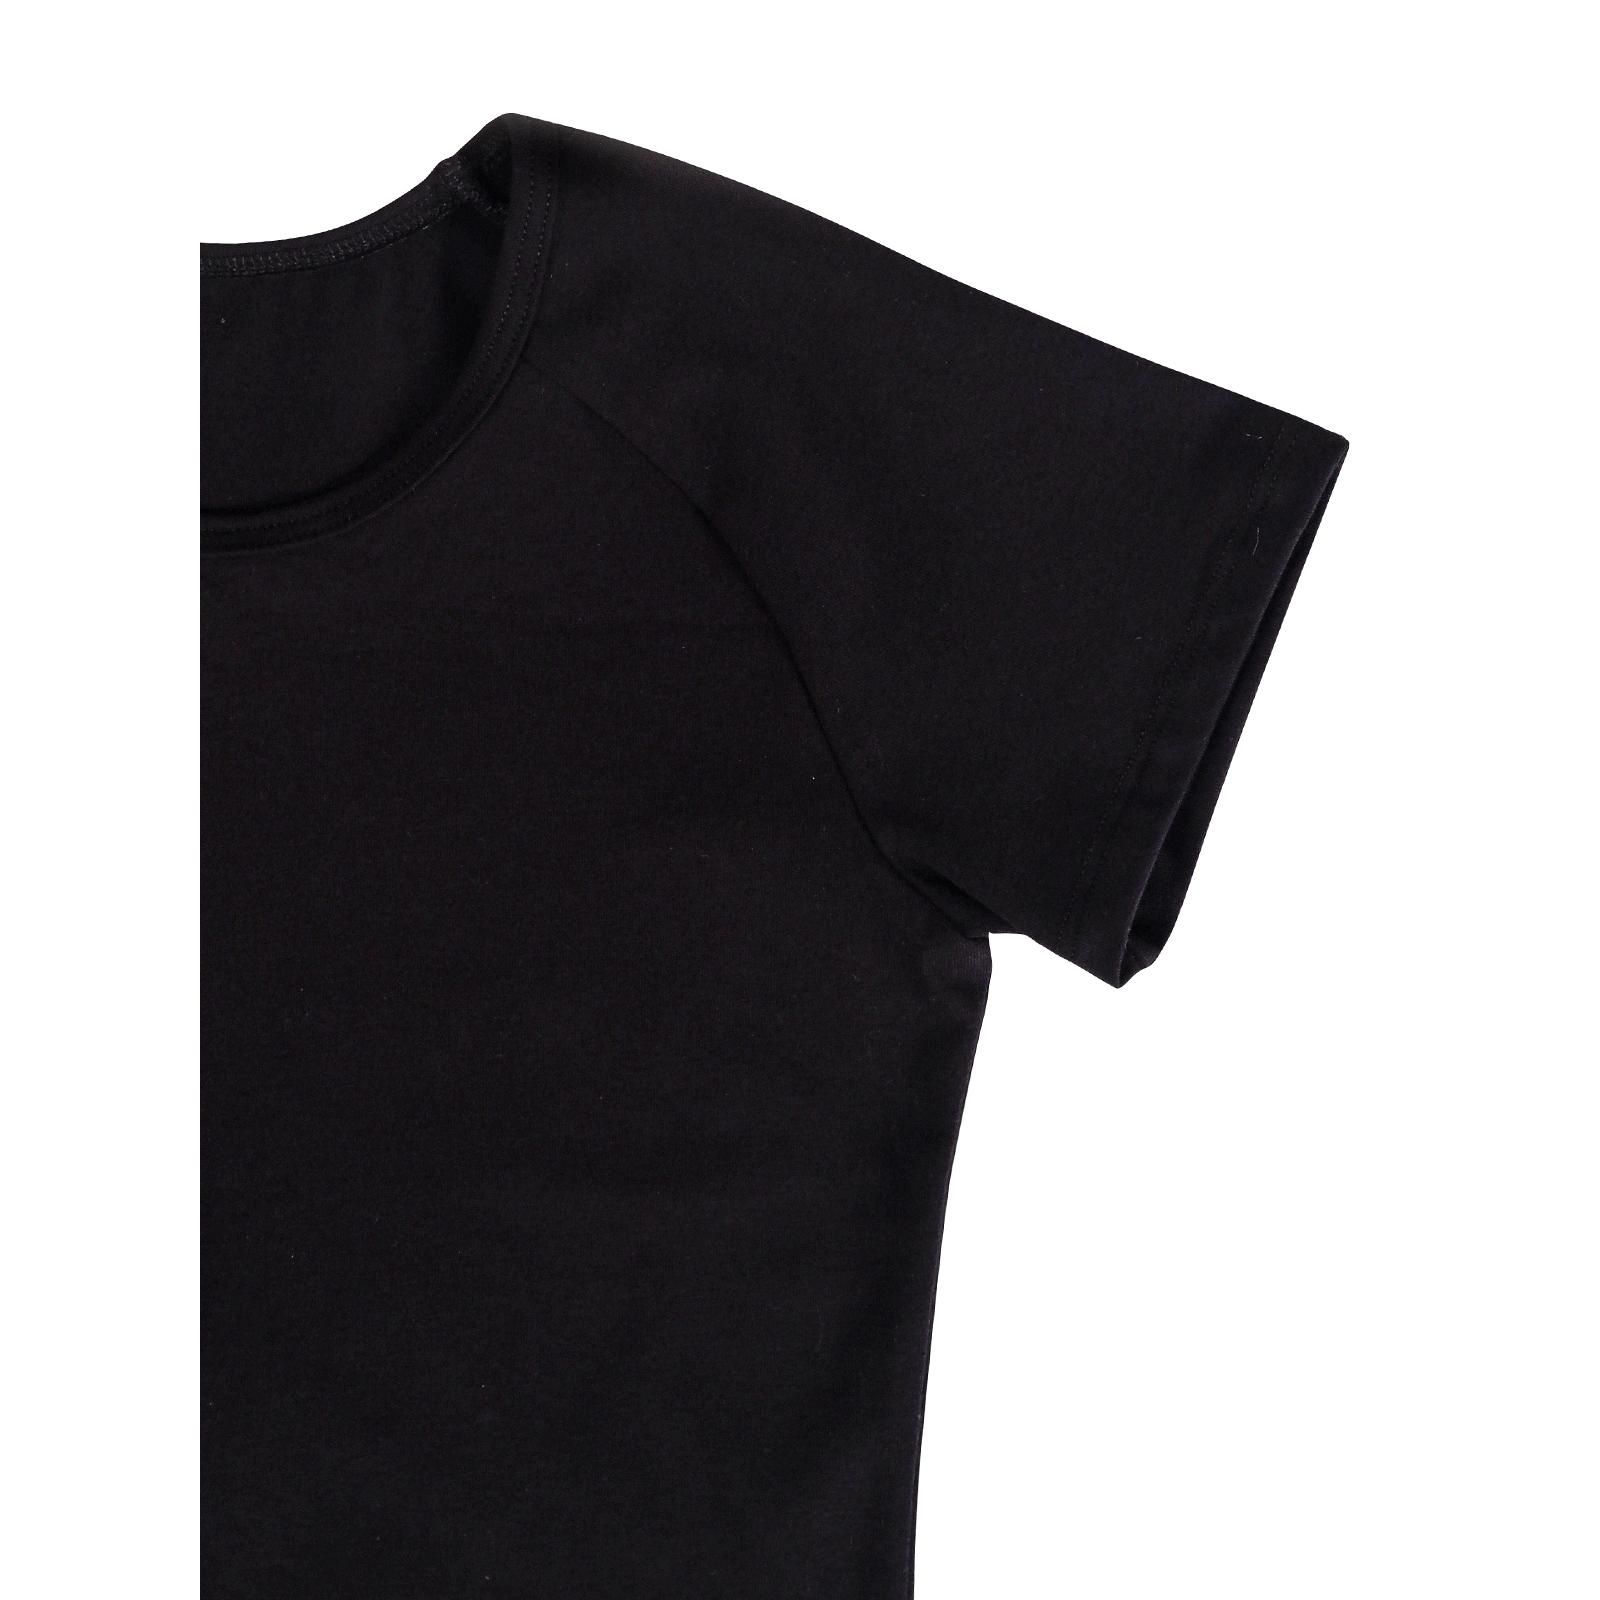 Camiseta Mangas Raglán de Algodón SOLO Negro Talla 30